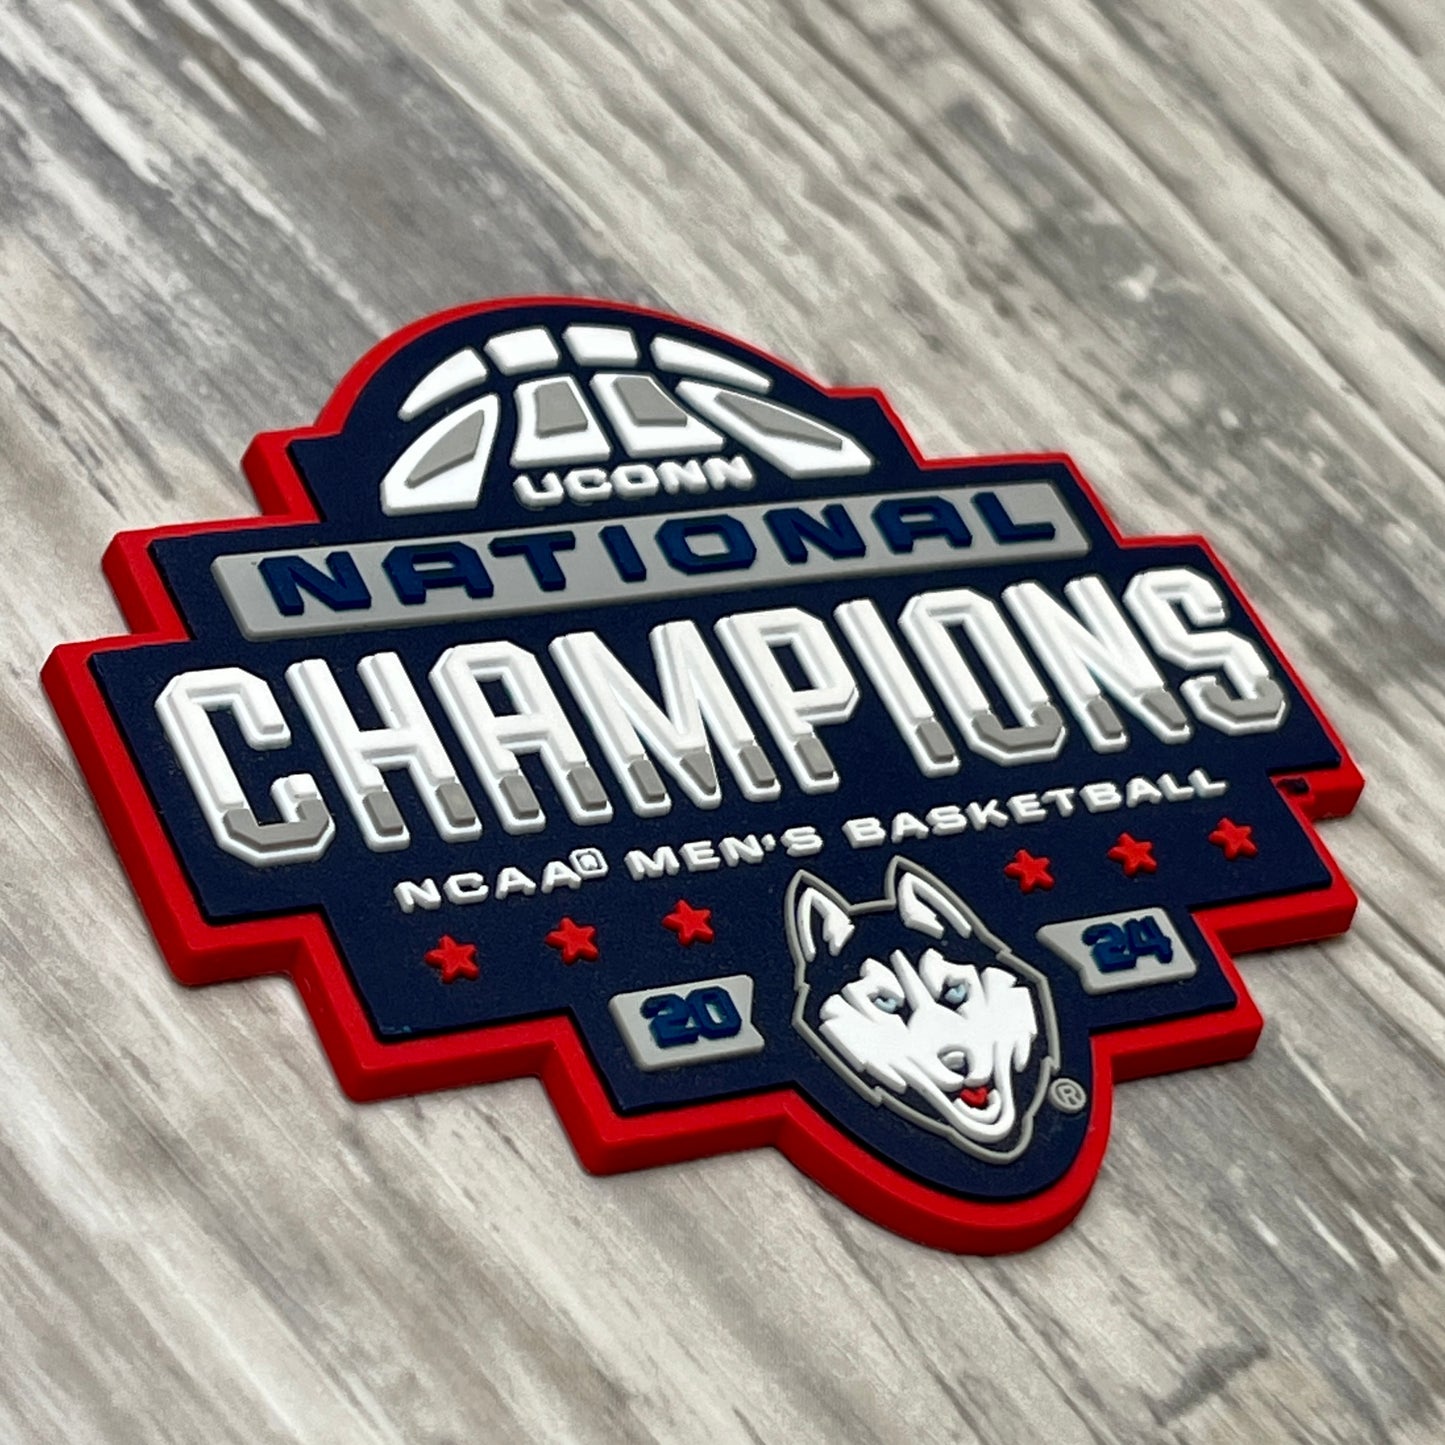 UConn Huskies 2024 NCAA Men's Basketball National Champions 3D YP Snapback Flat Bill Hat- White/ Black